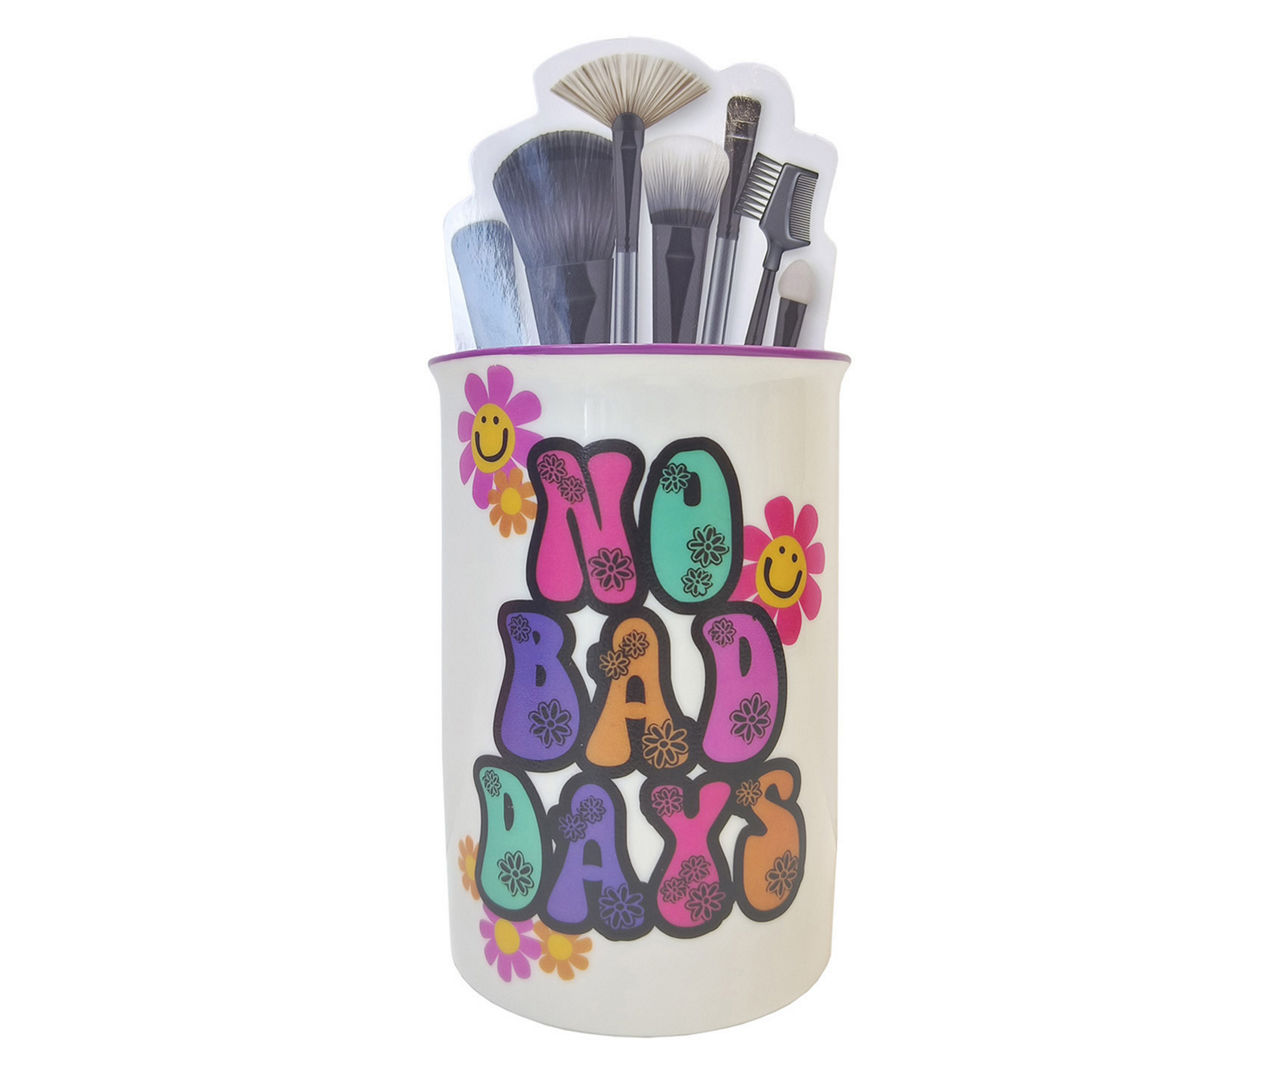 "No Bad Days" Ceramic Makeup Brush Holder